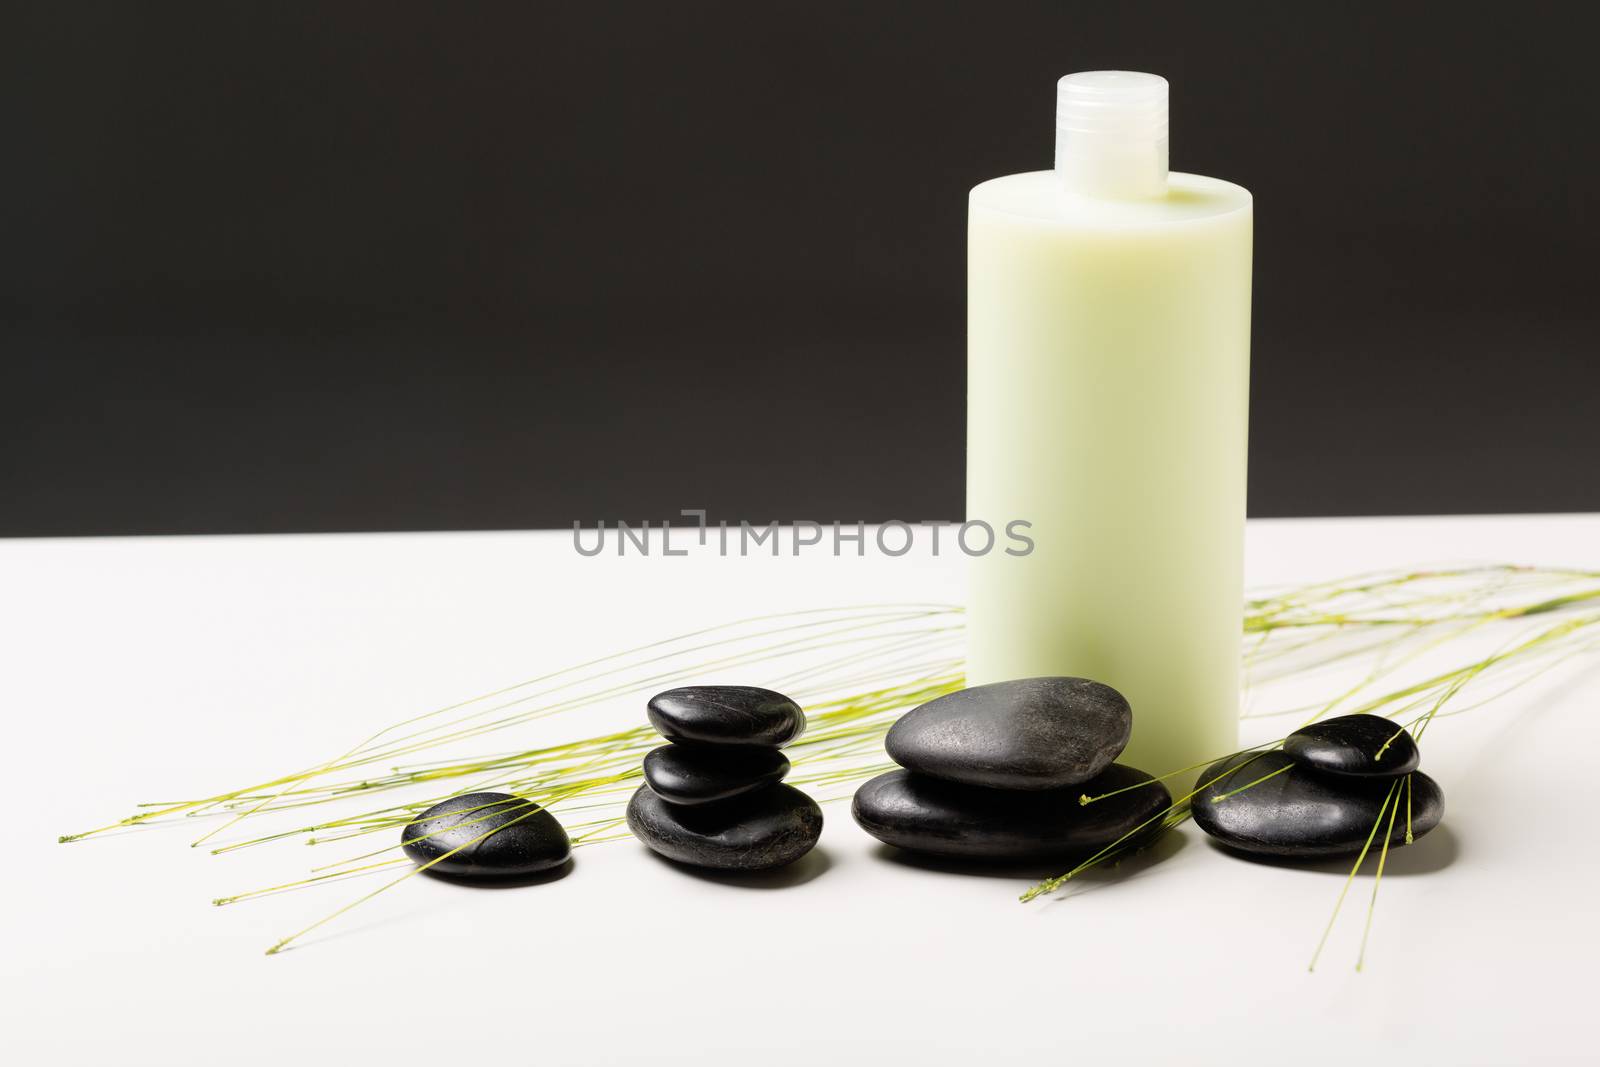 shampoo bottle, massage stones and green plant by dolgachov